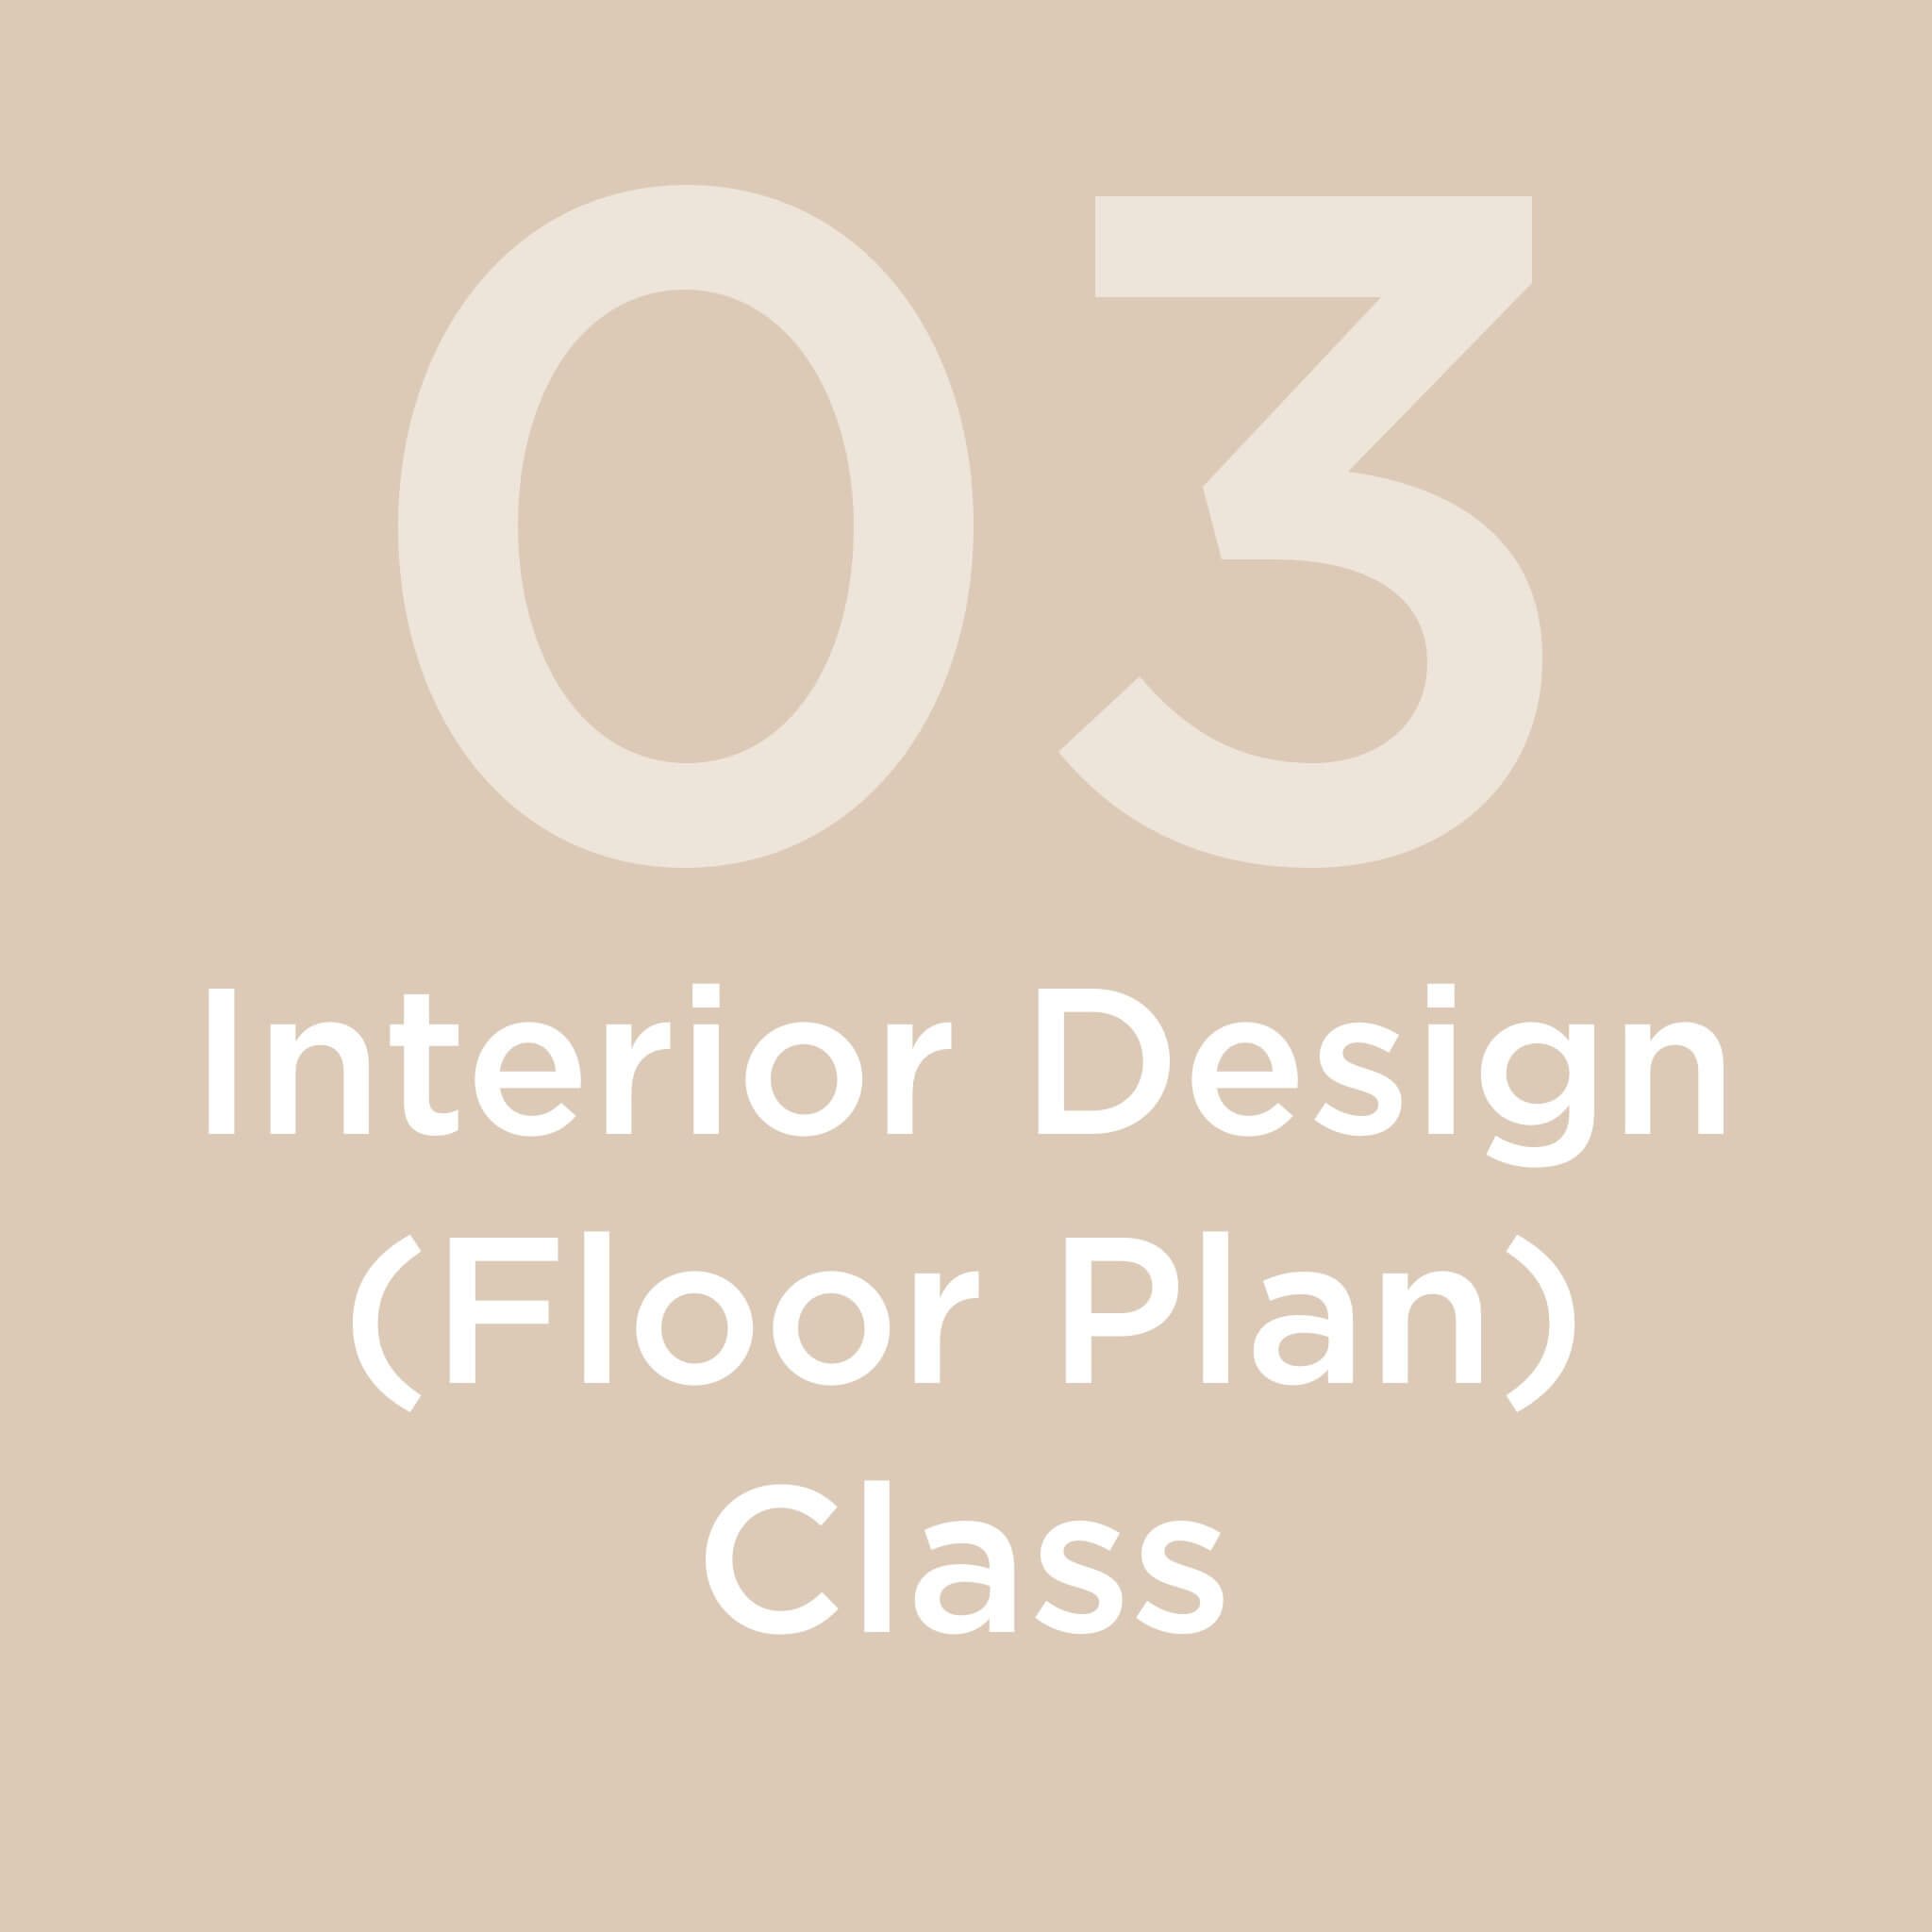 How to get started Interior Design Floor Plan Class